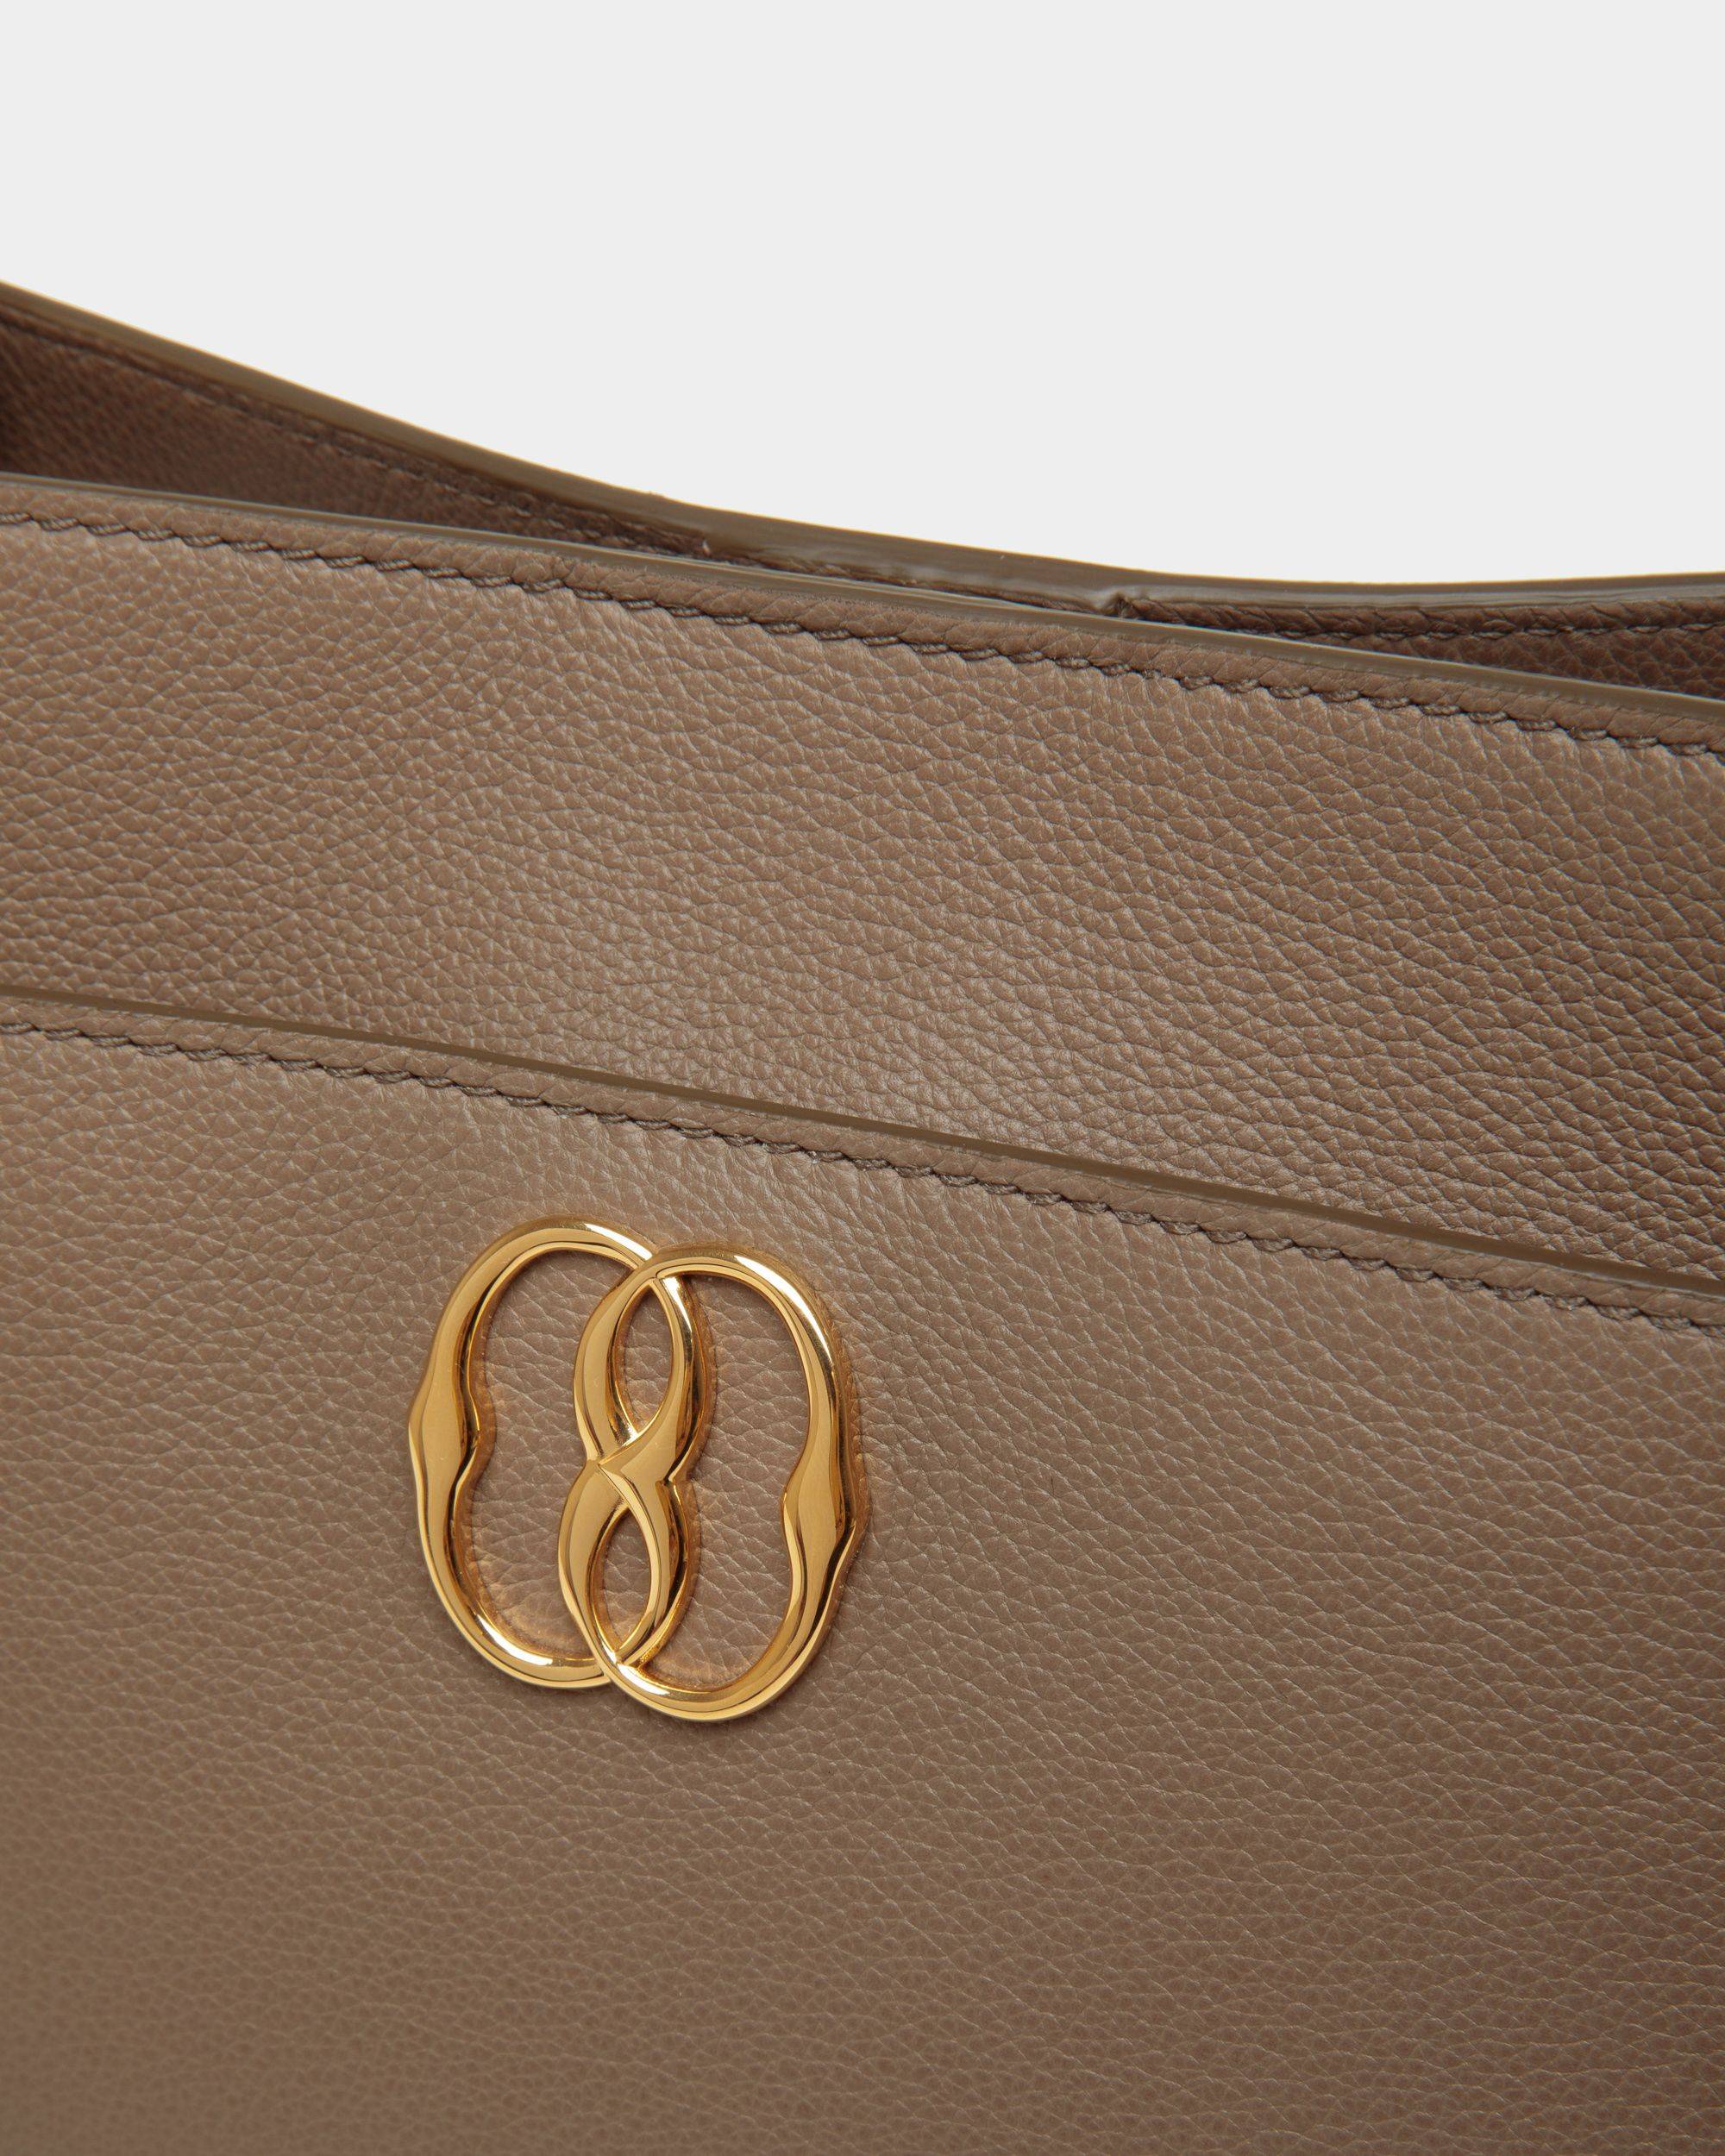 Emblem | Women's Shoulder Bag in Beige Grained Leather | Bally | Still Life Detail